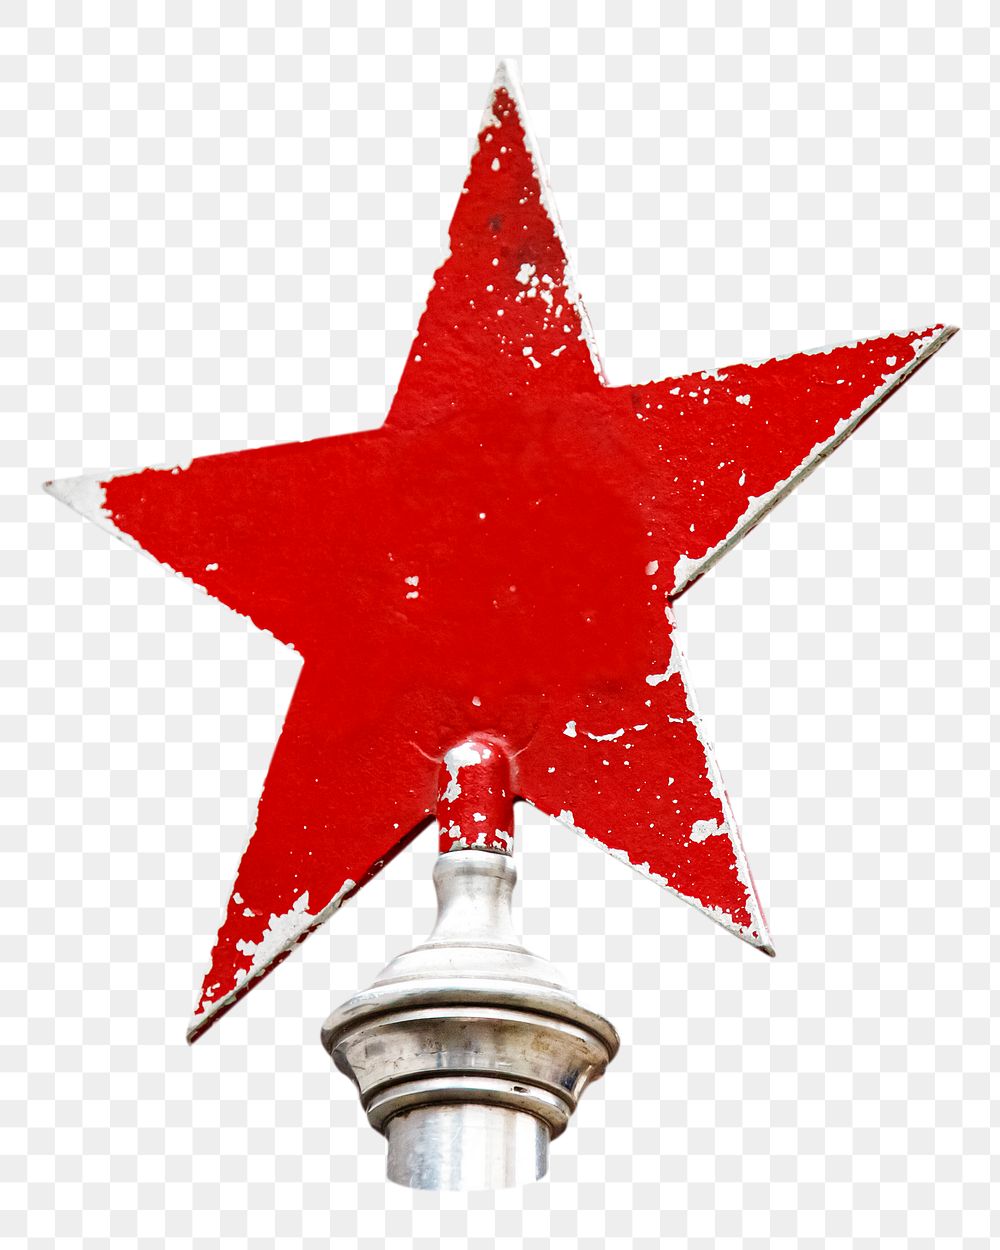  Communism red star png sticker, transparent background